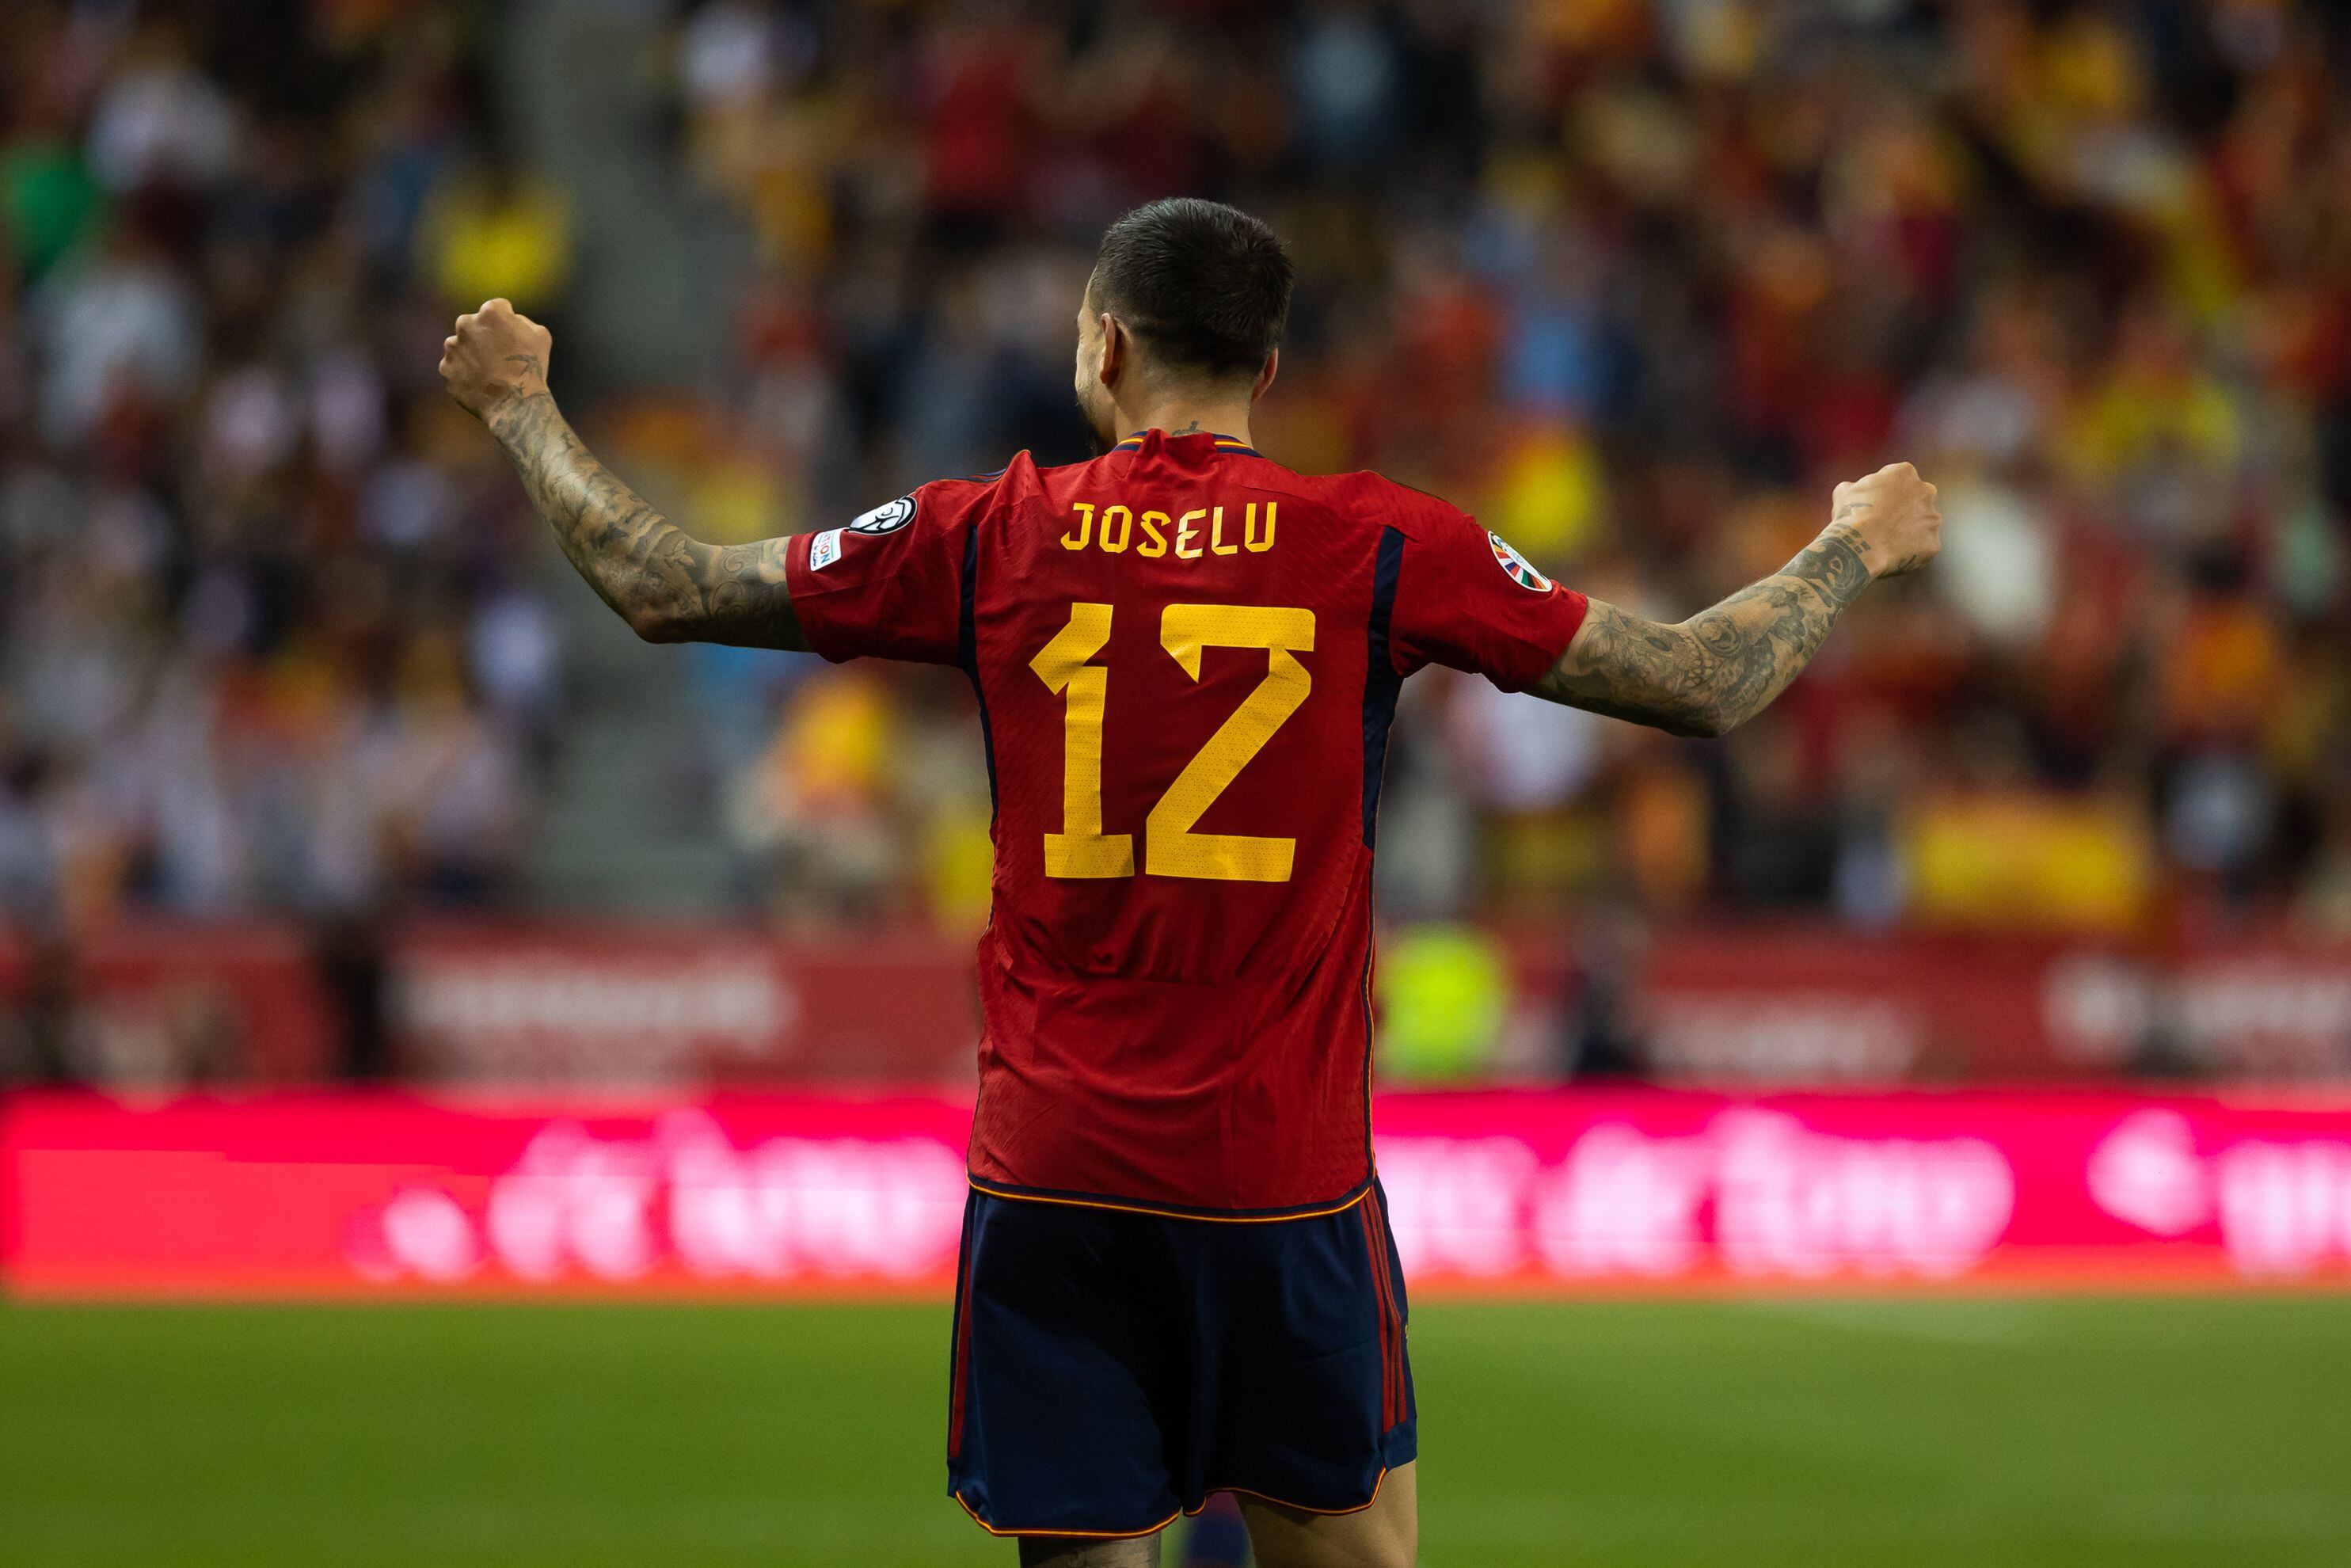 Joselu: Spain's unlikely striker